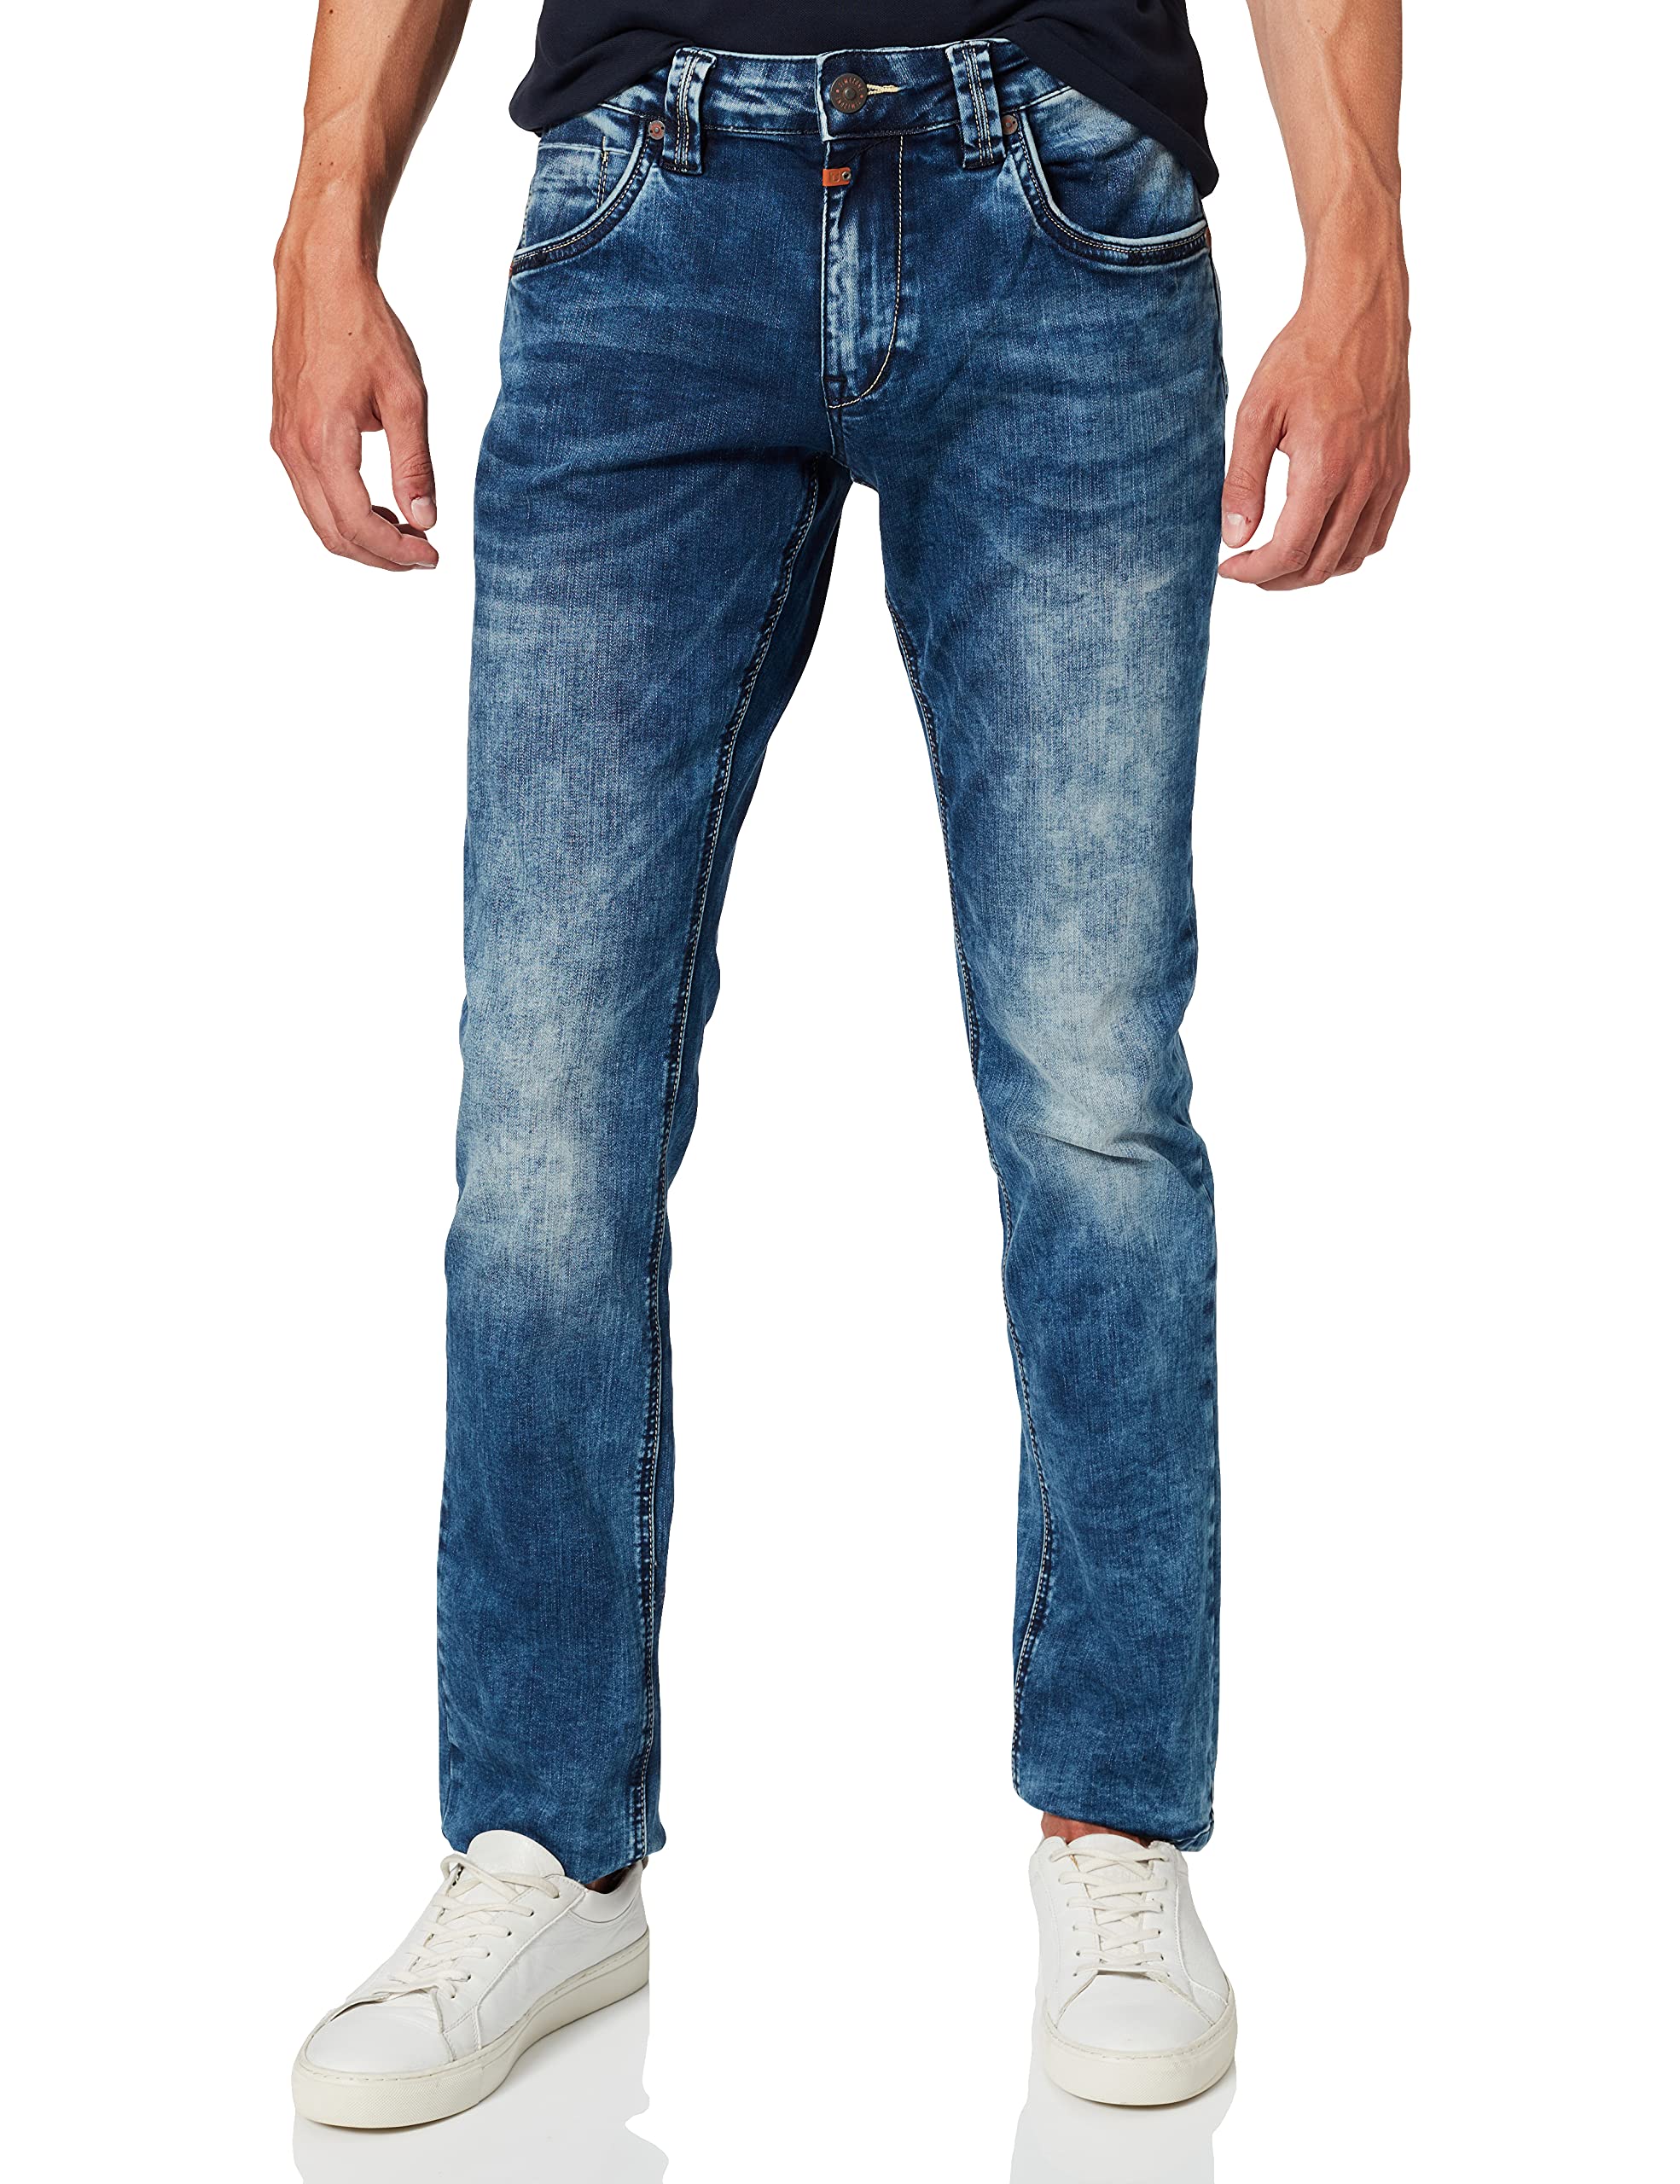 Timezone Herren EduardoTZ Slim Jeans, Blau (White Aged Wash 3201), W33/L30